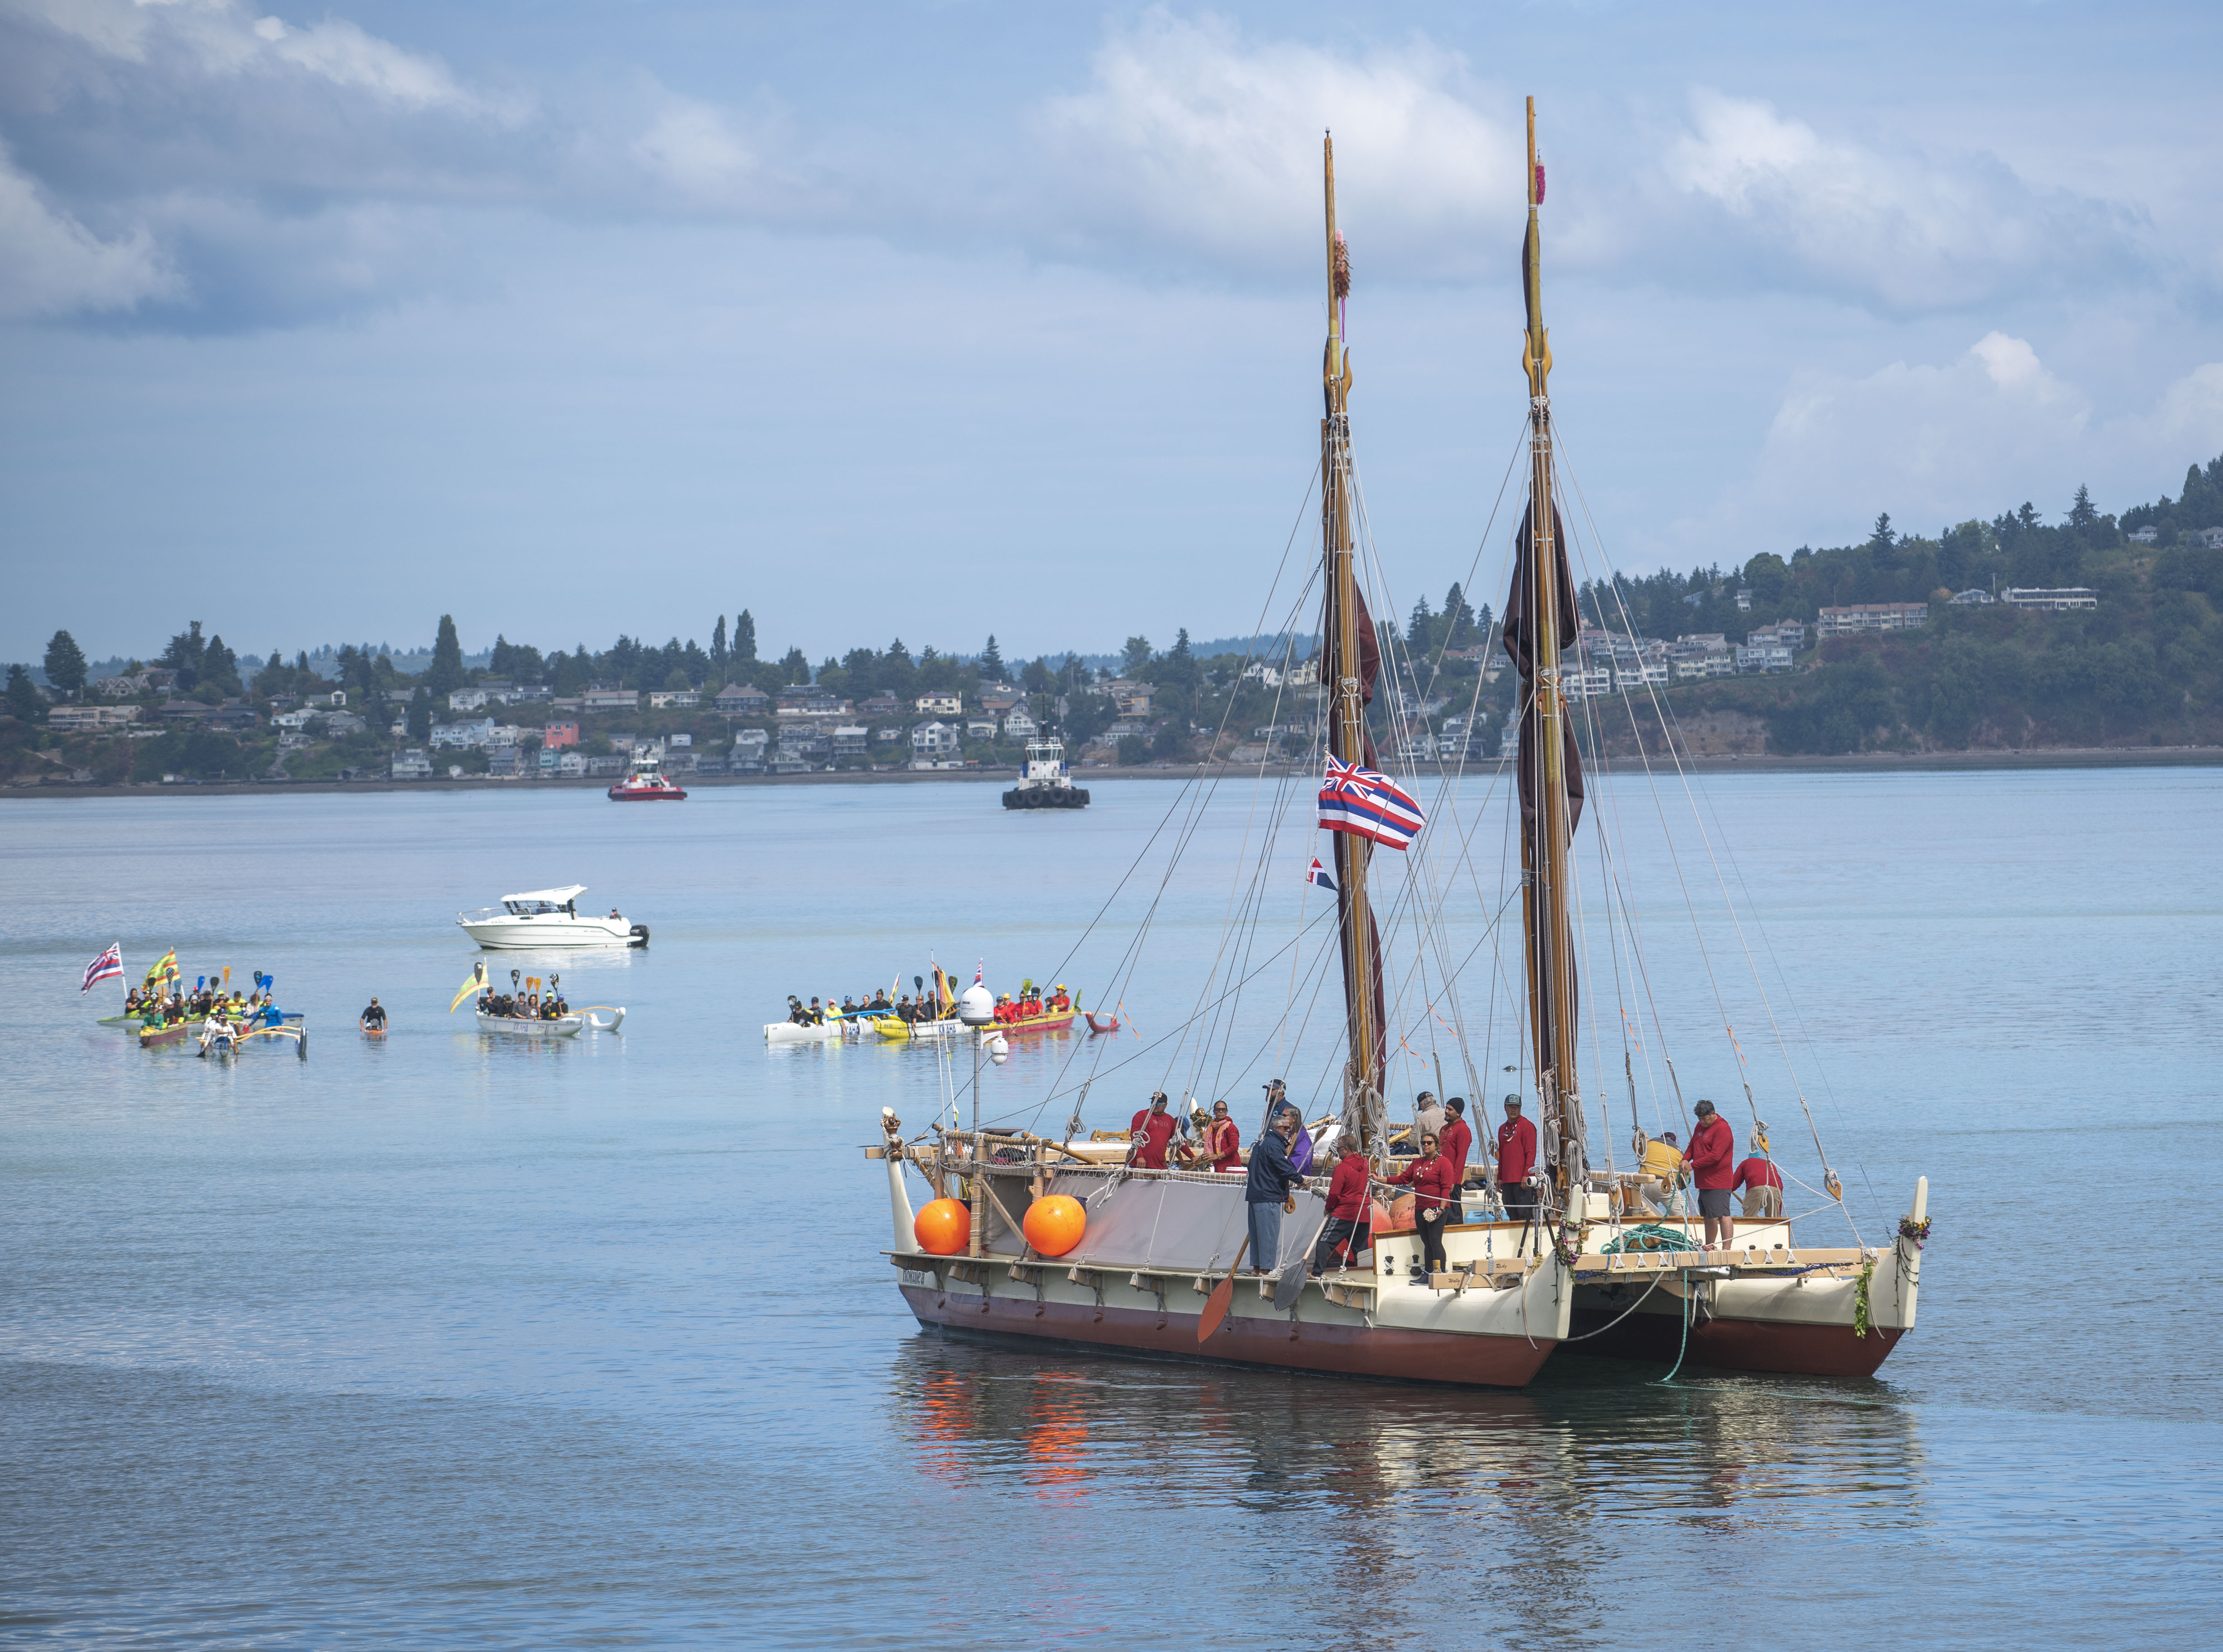 The traditional Polynesian voyaging canoe Hōkūleʻa arrives in Tacoma.